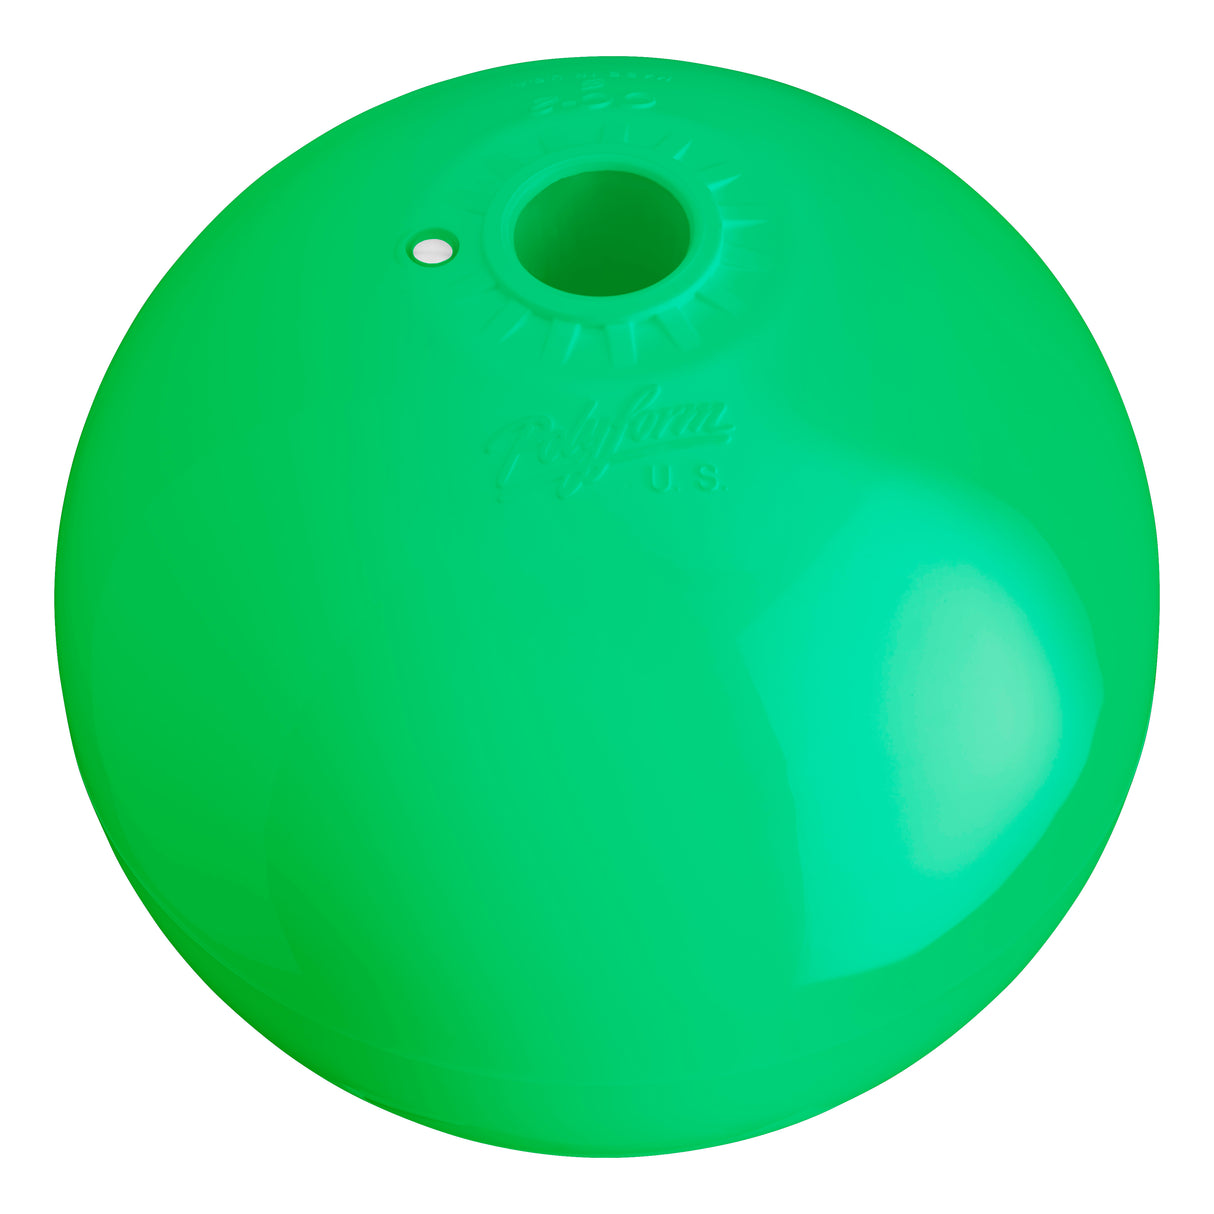 Hole through center mooring and marker buoy, Polyform CC-3 Green angled shot